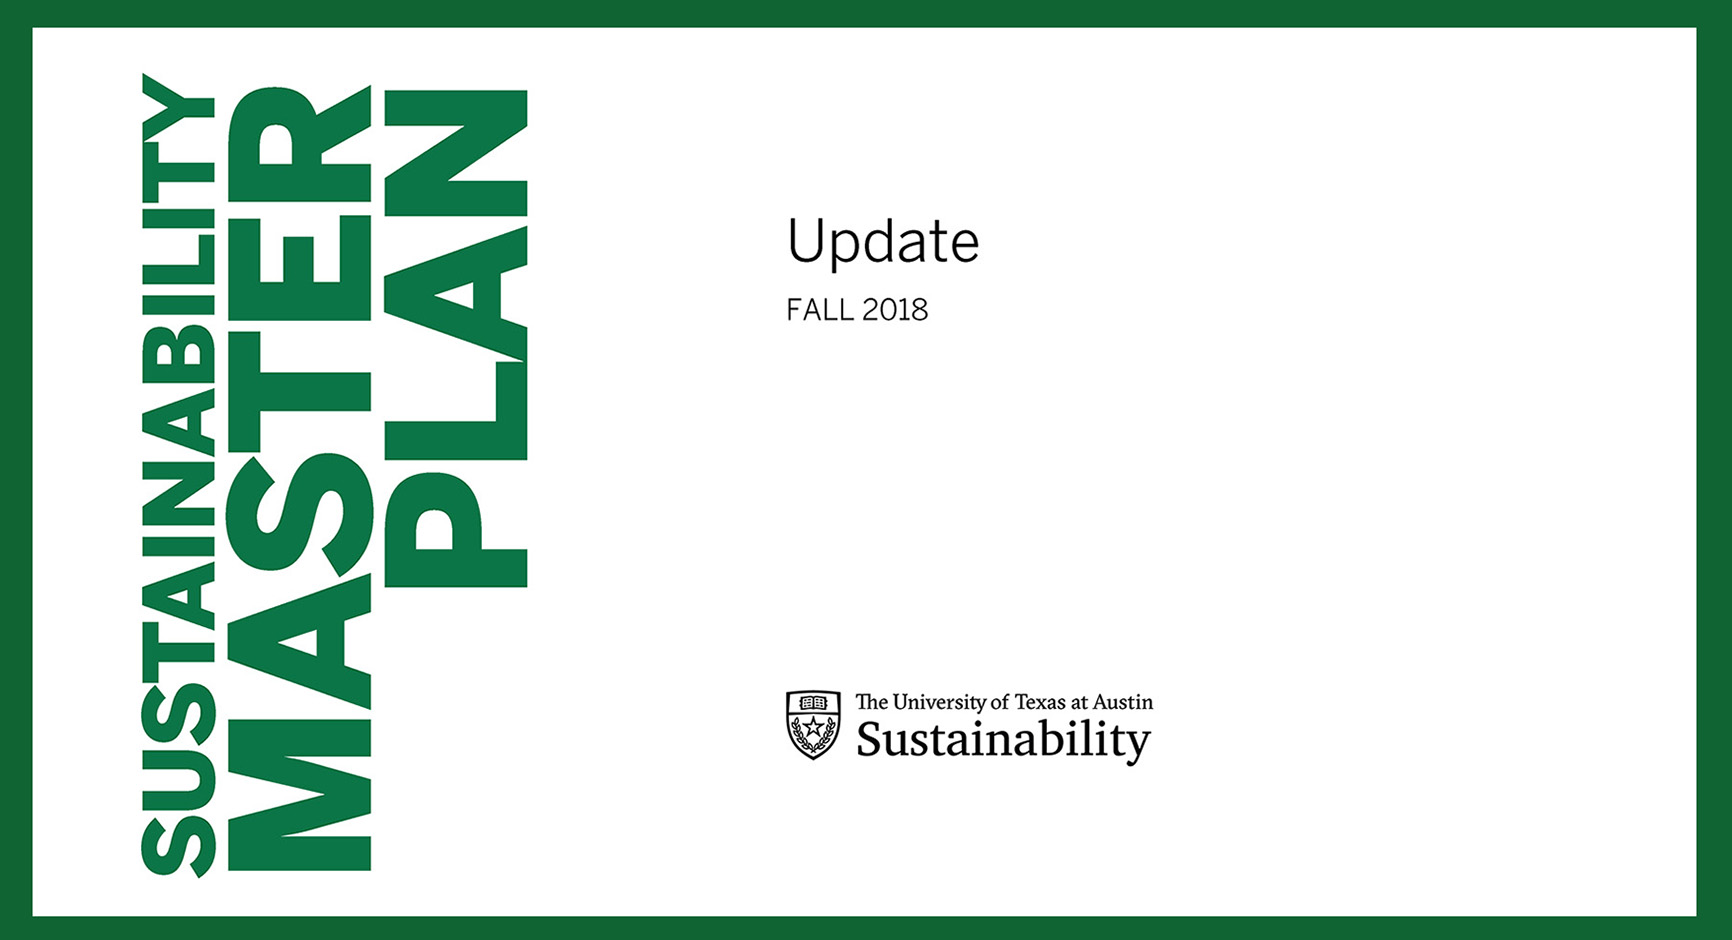 Update to the Sustainability Masterplan